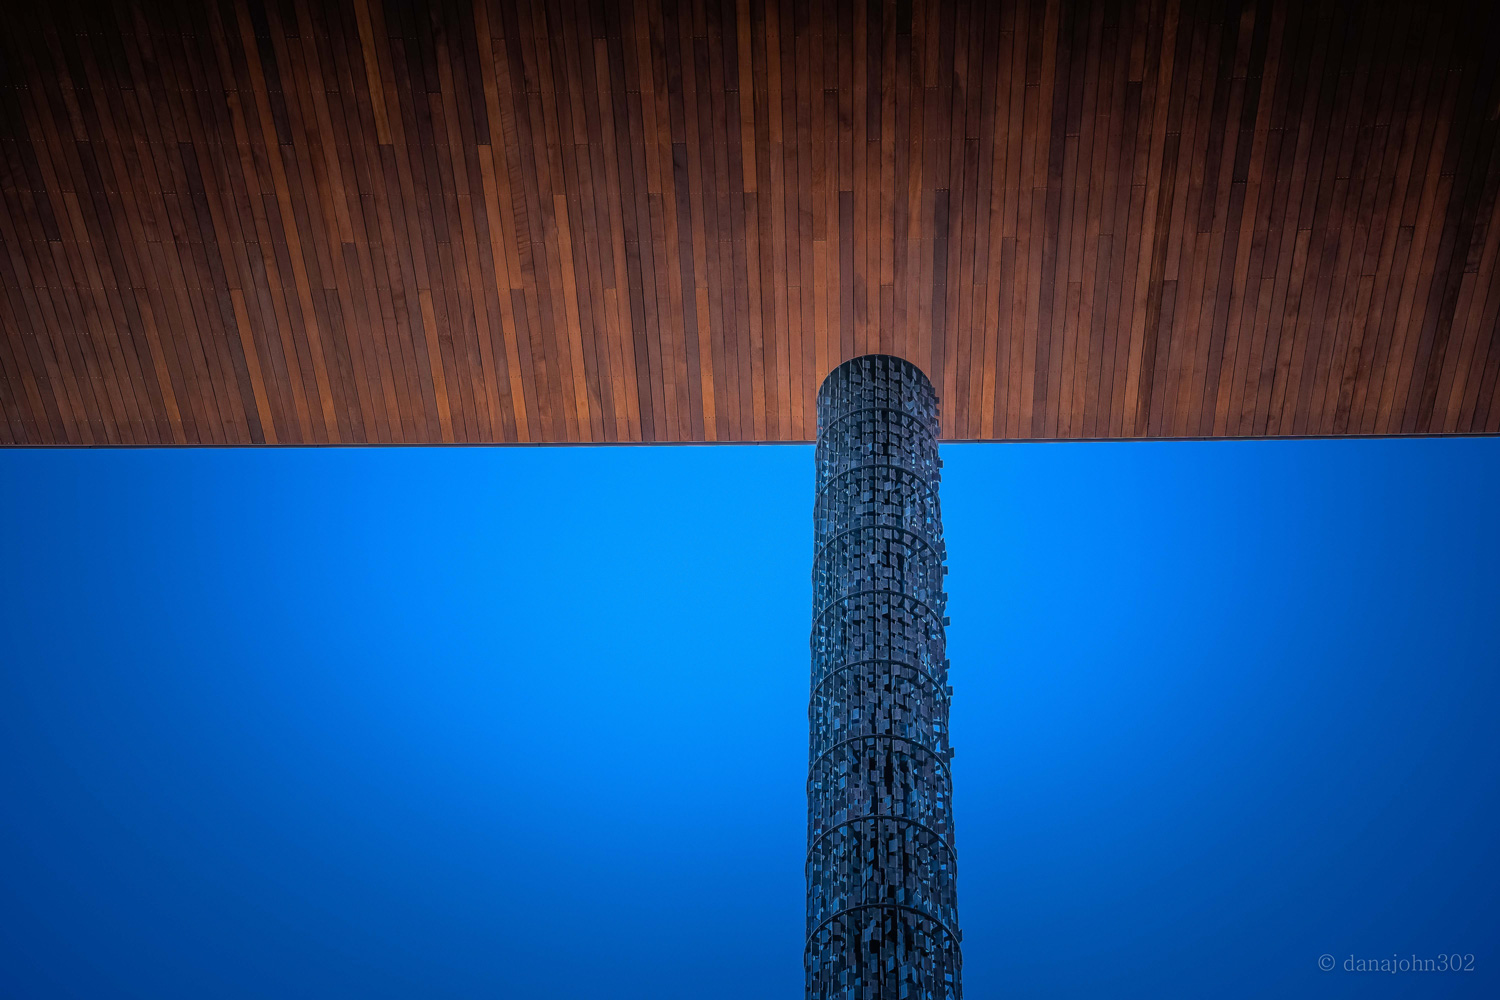 Floating column @ Georrge Deukmejian Courthouse  by Dana Lance for Danajohn Photography © danajohn302